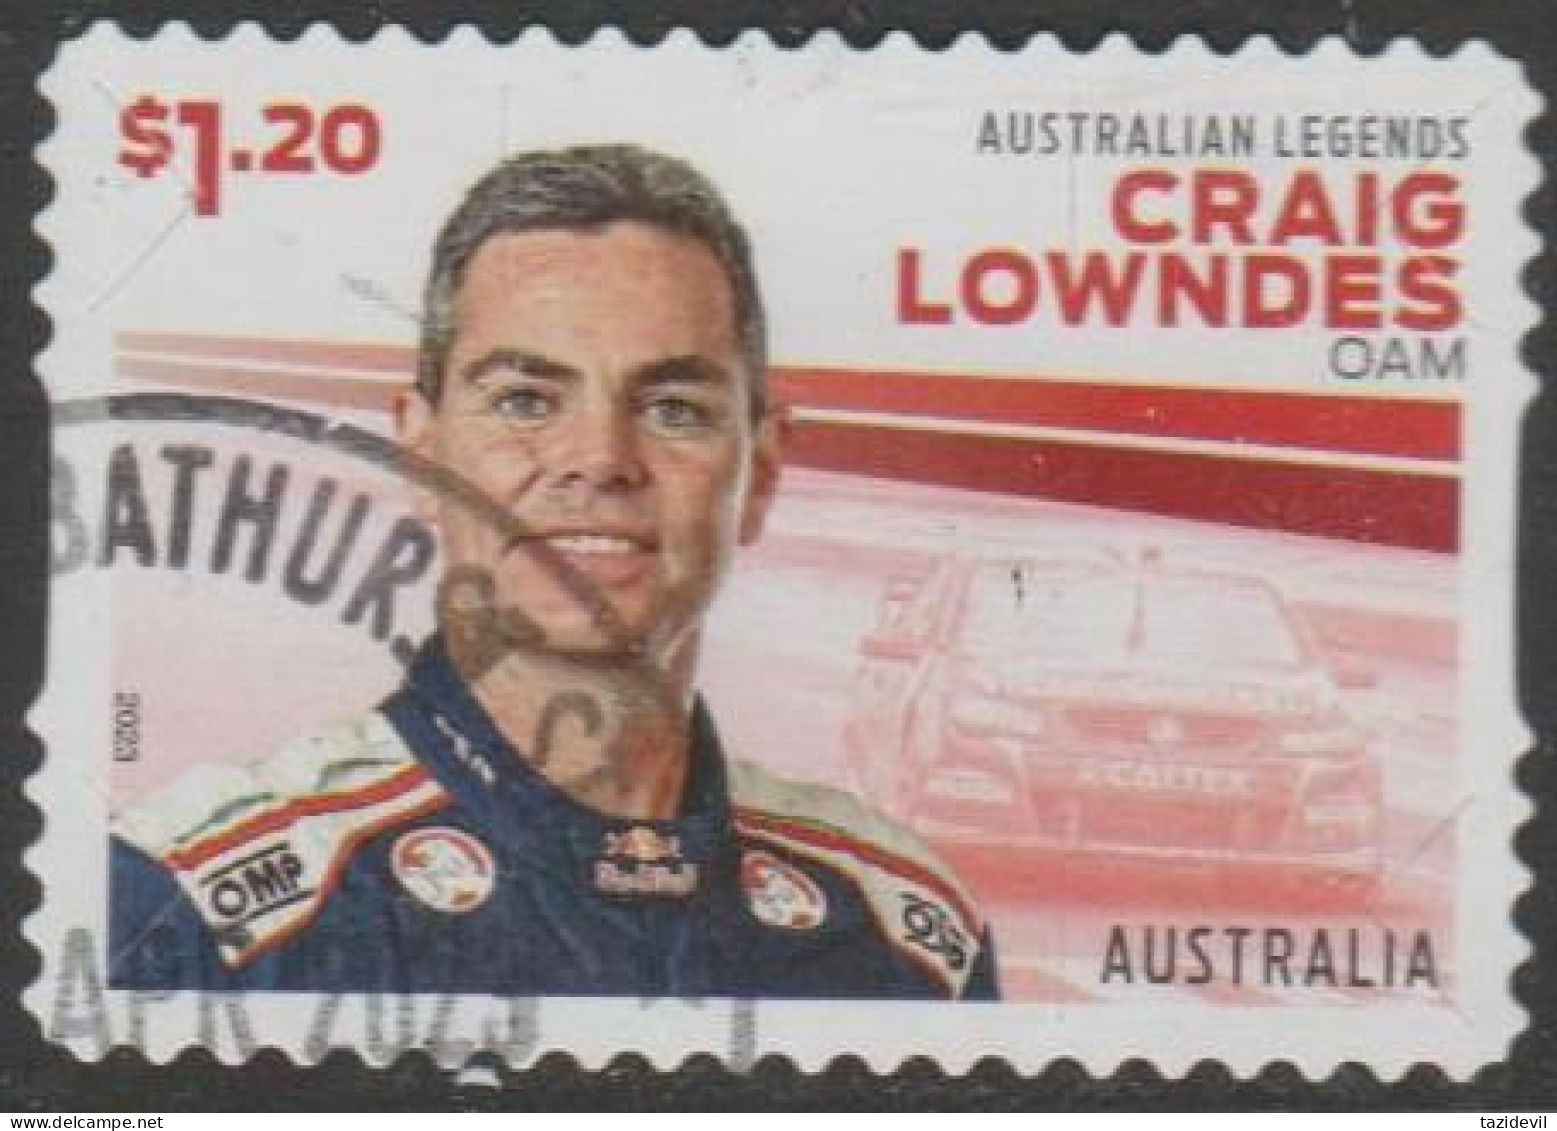 AUSTRALIA - DIE-CUT-USED 2023 $1.20 Legends Of Motor Sport - Craig Lowdens OAM - Gebraucht